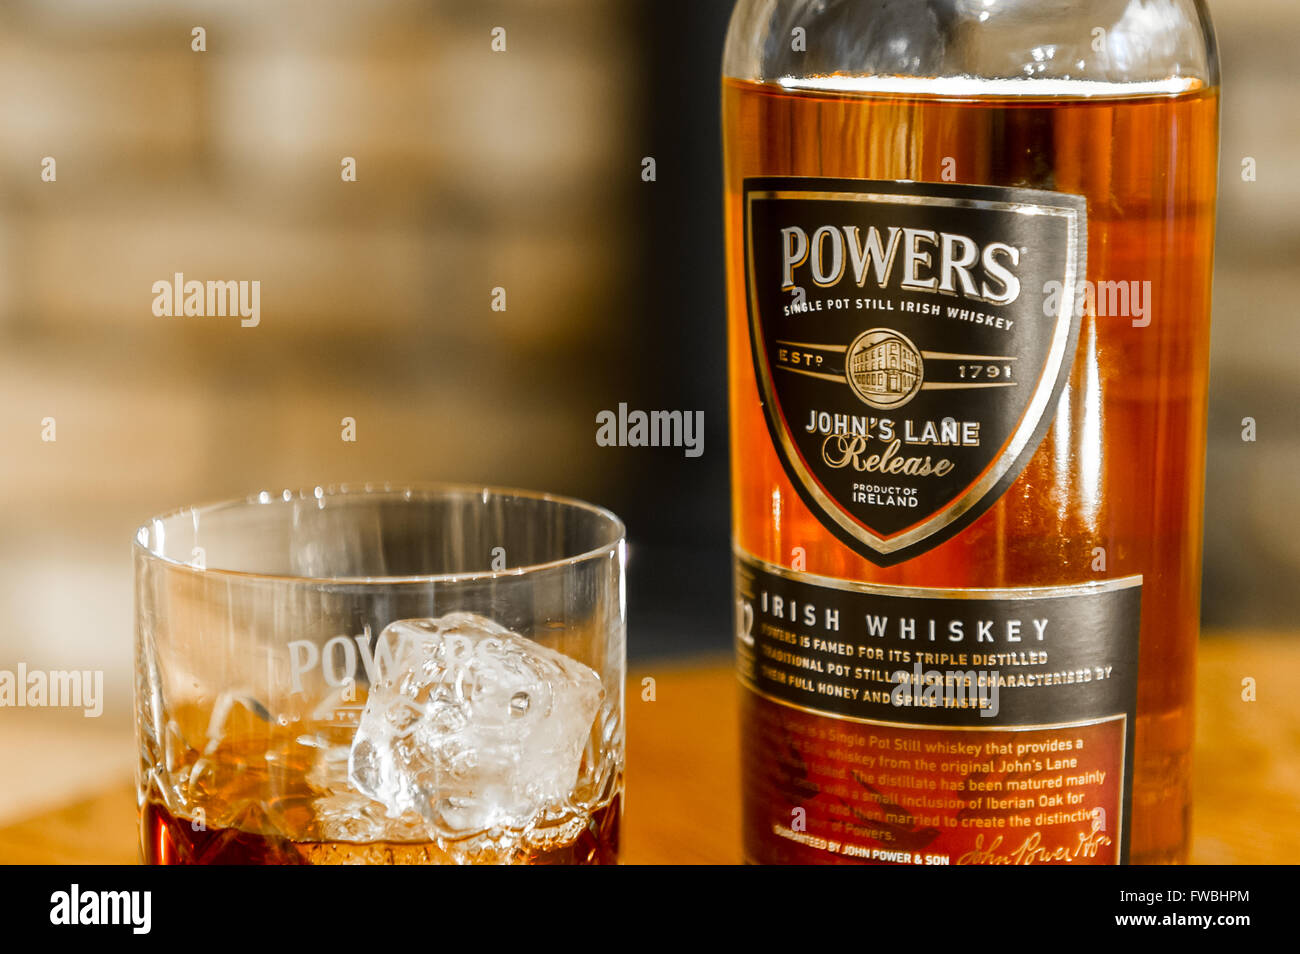 Una botella de poderes solo pot still whisky irlandés con un vaso de whisky con cubitos de hielo. Foto de stock